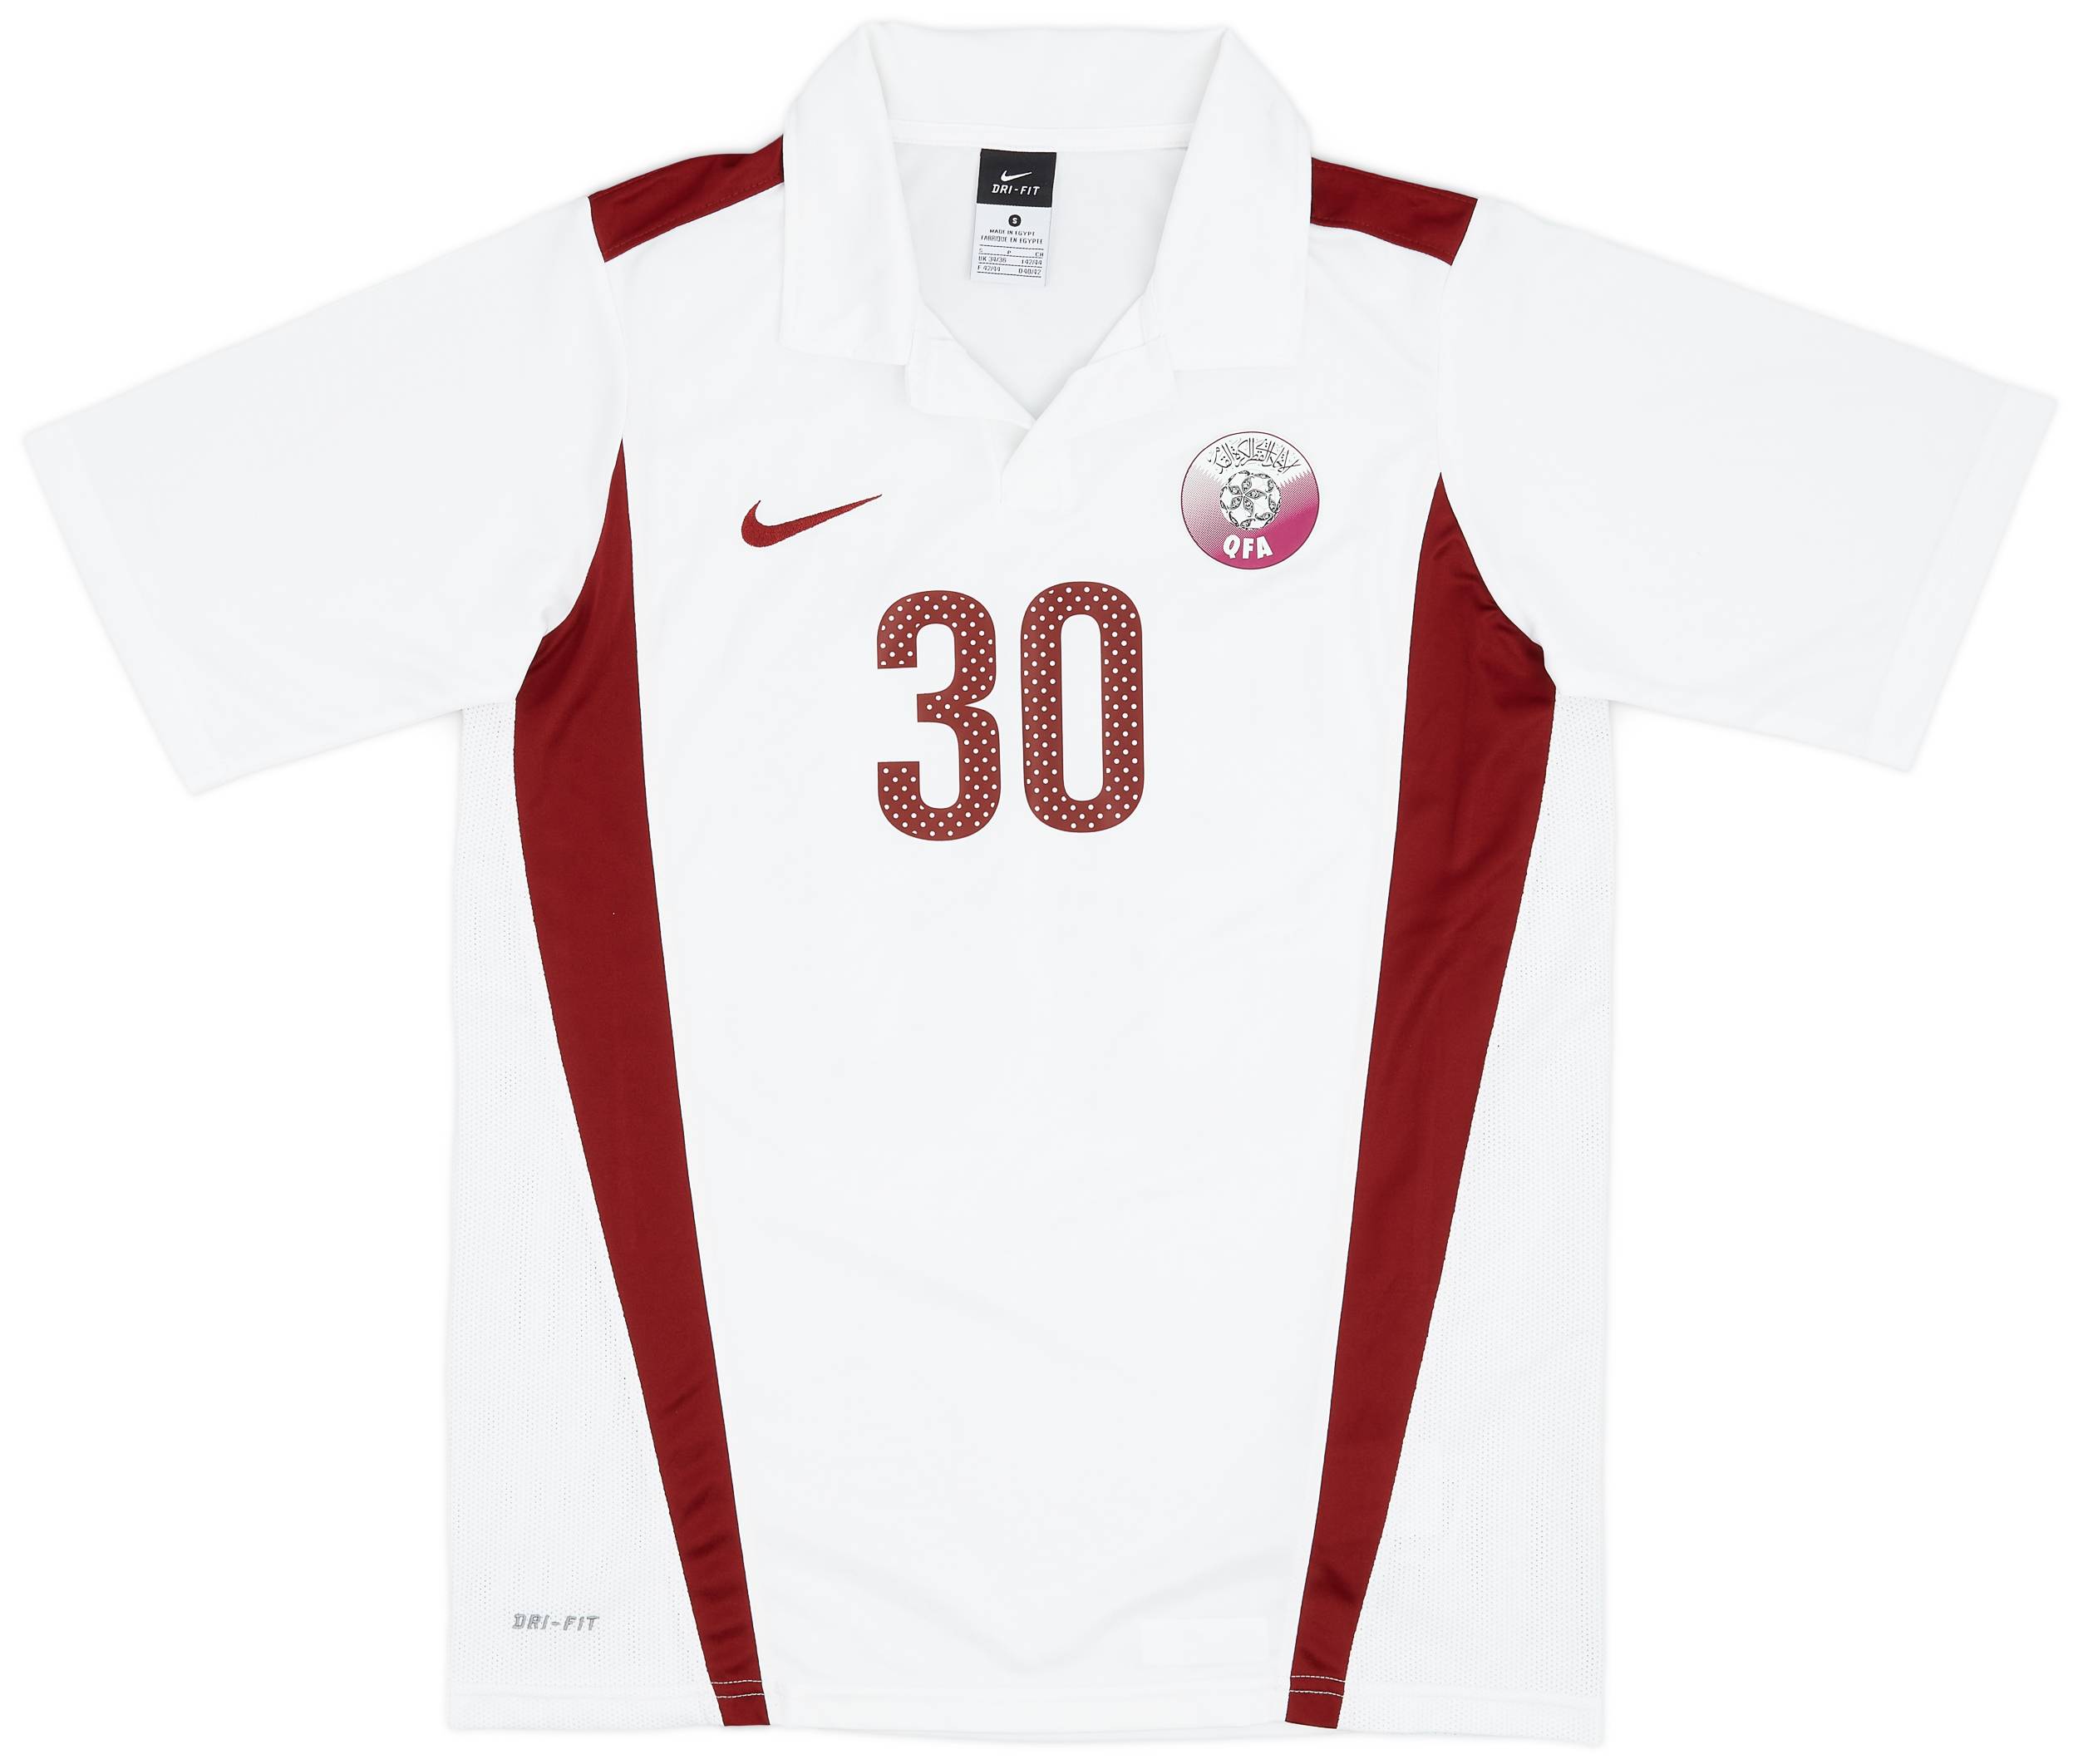 2011-12 Qatar Away Shirt #30 - 9/10 - (S)